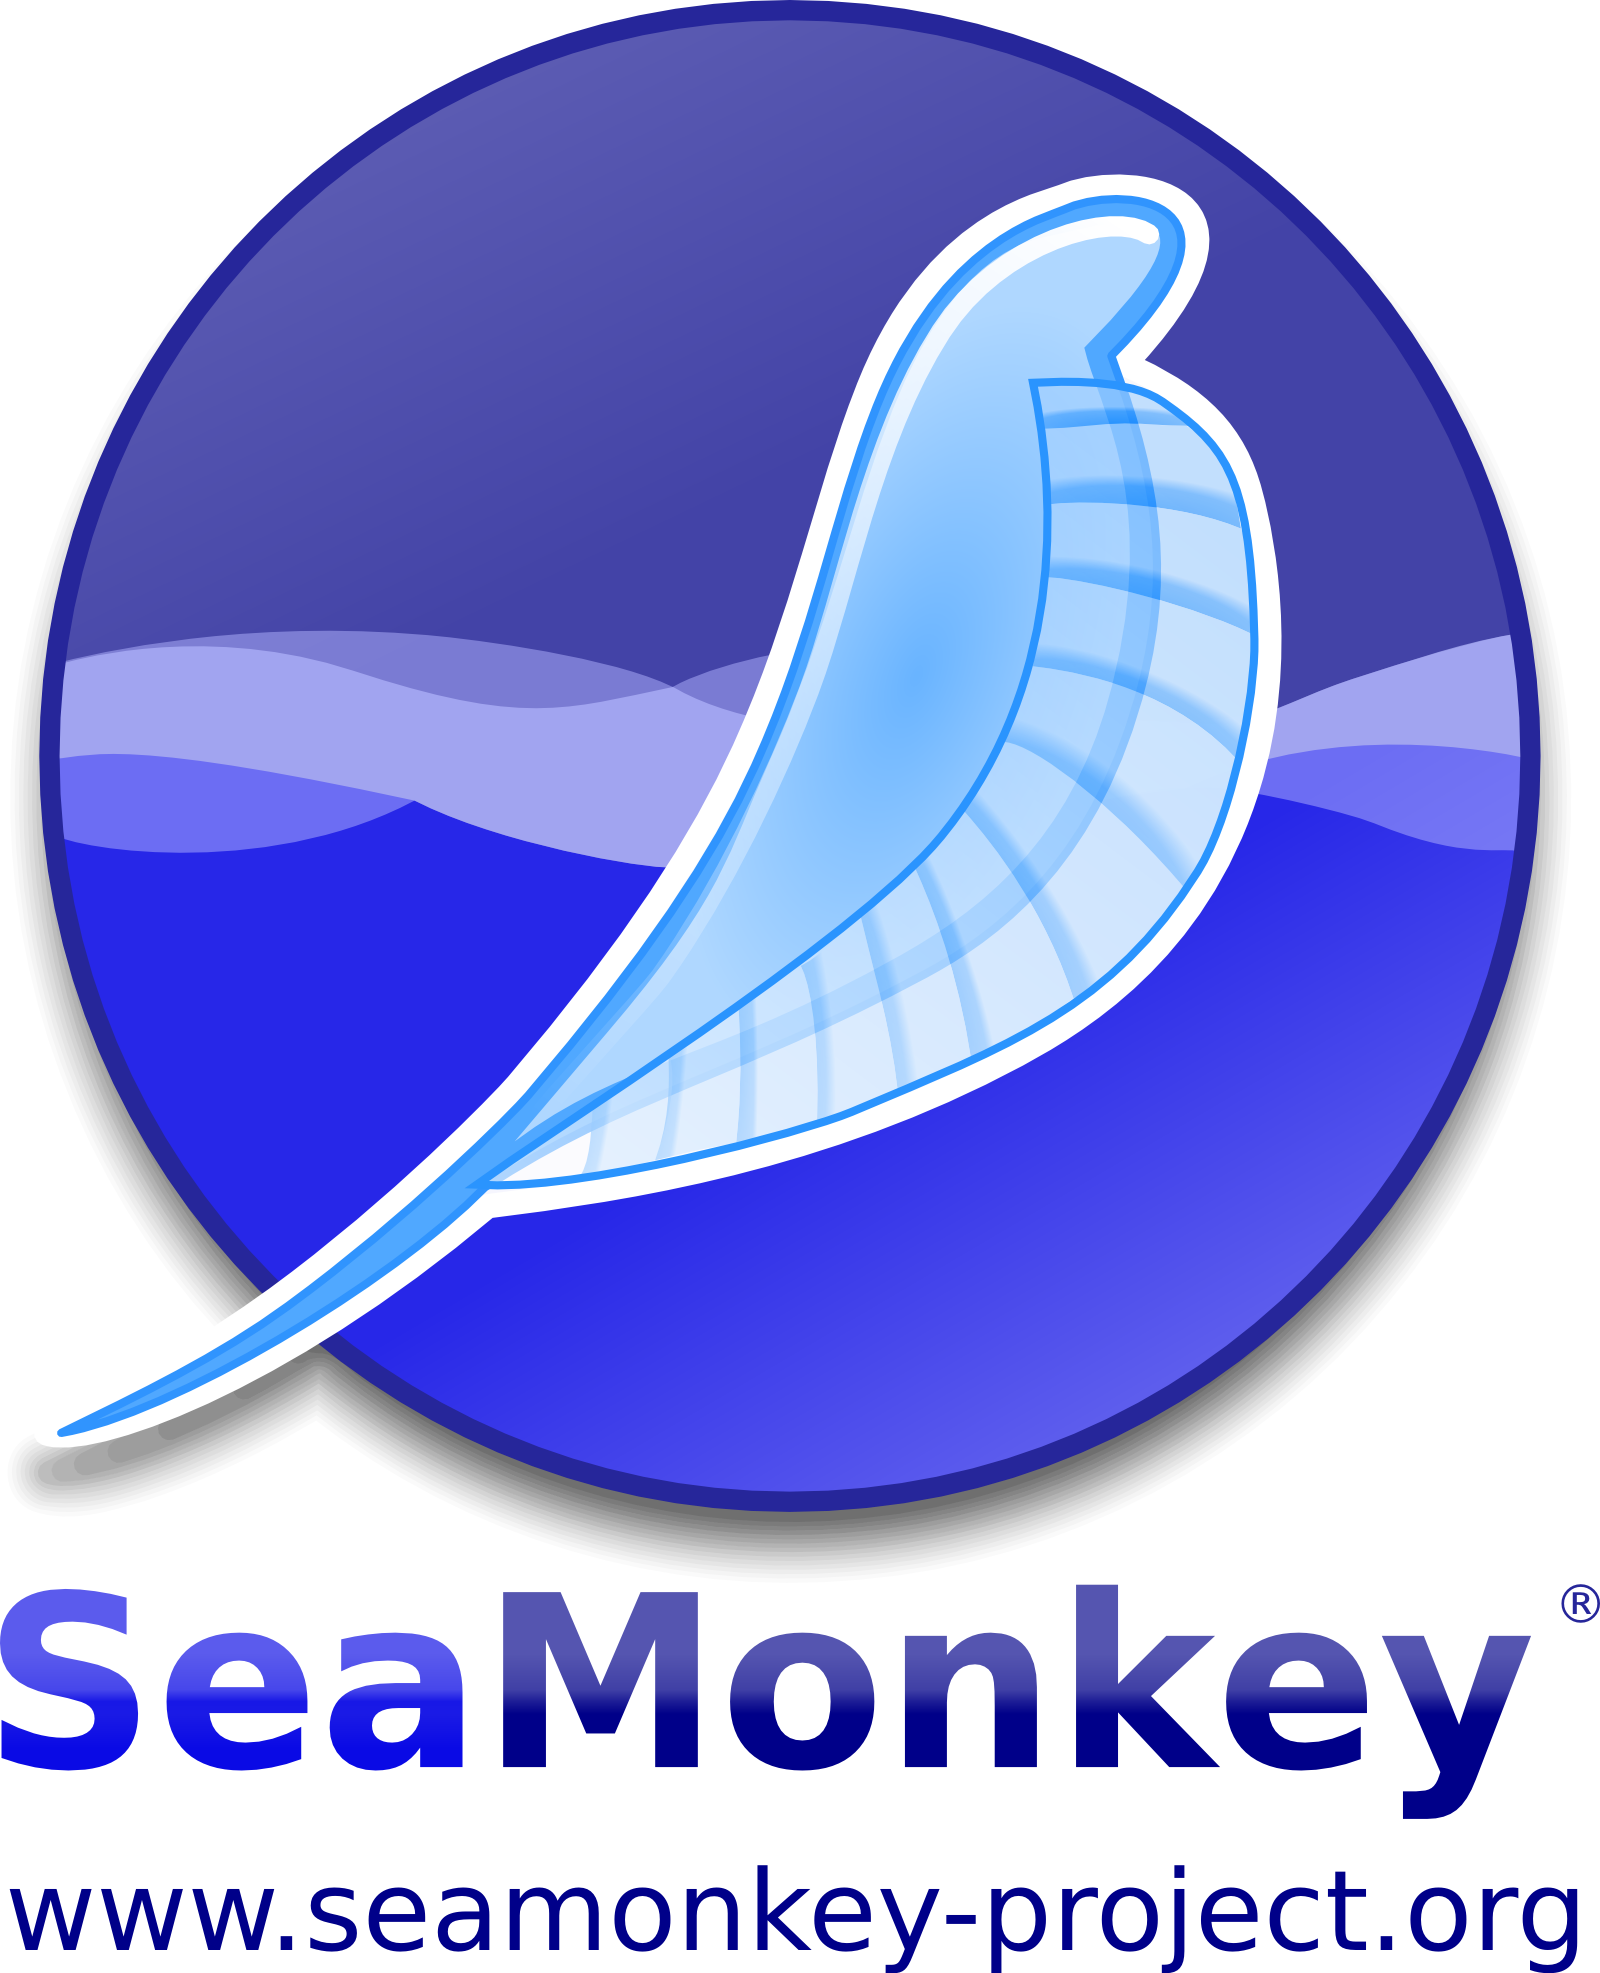 de-community-2010/seamonkey-with-font2-web_r.png